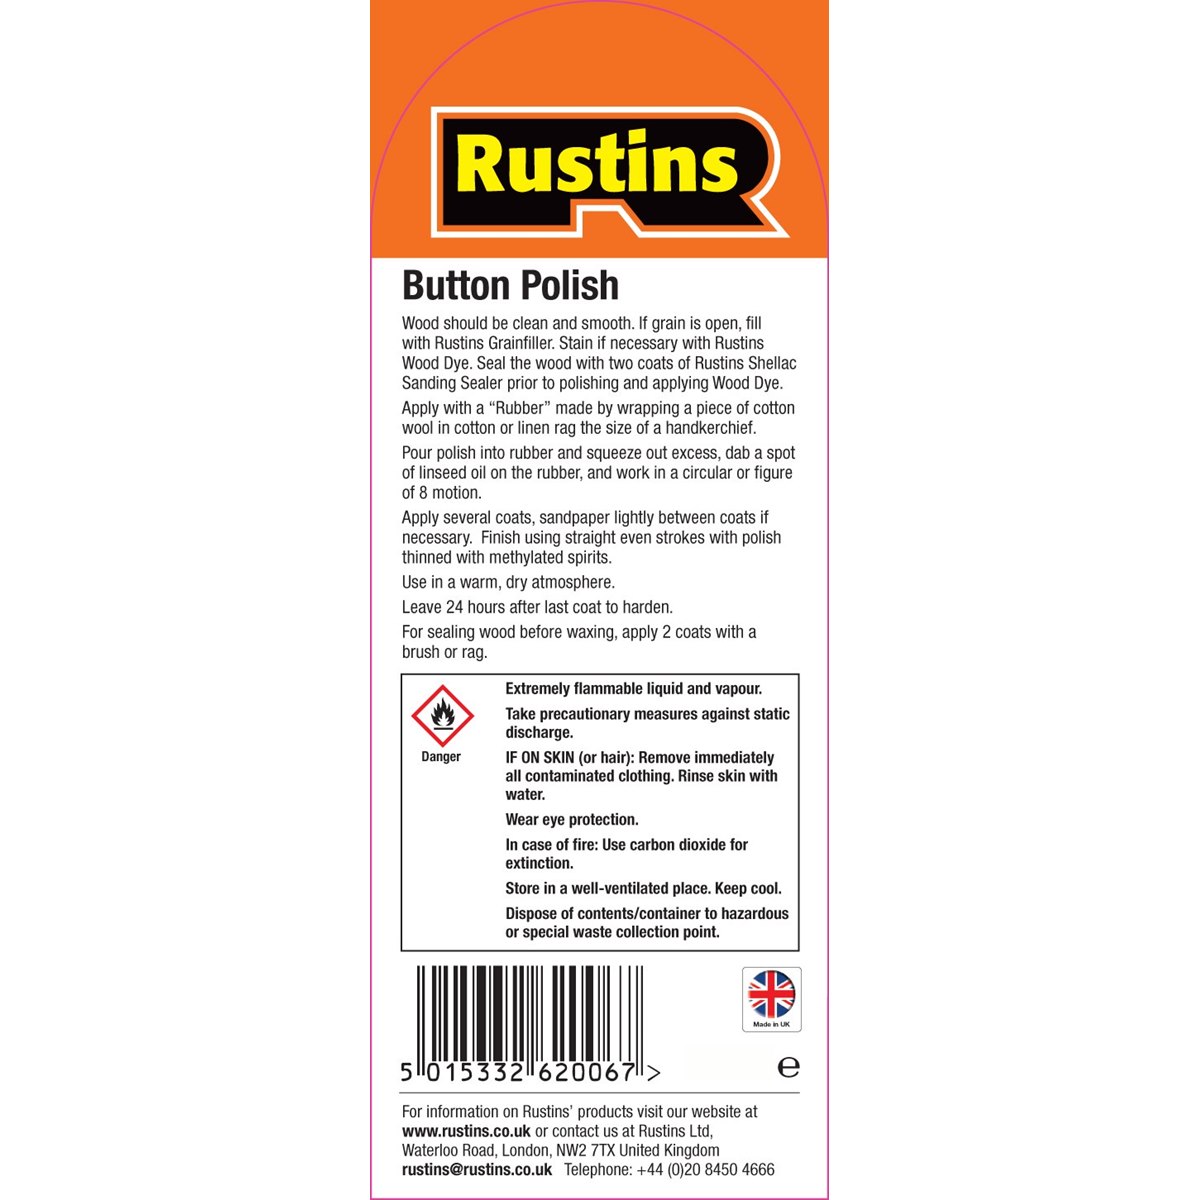 Rustins Button Polish usage instructions